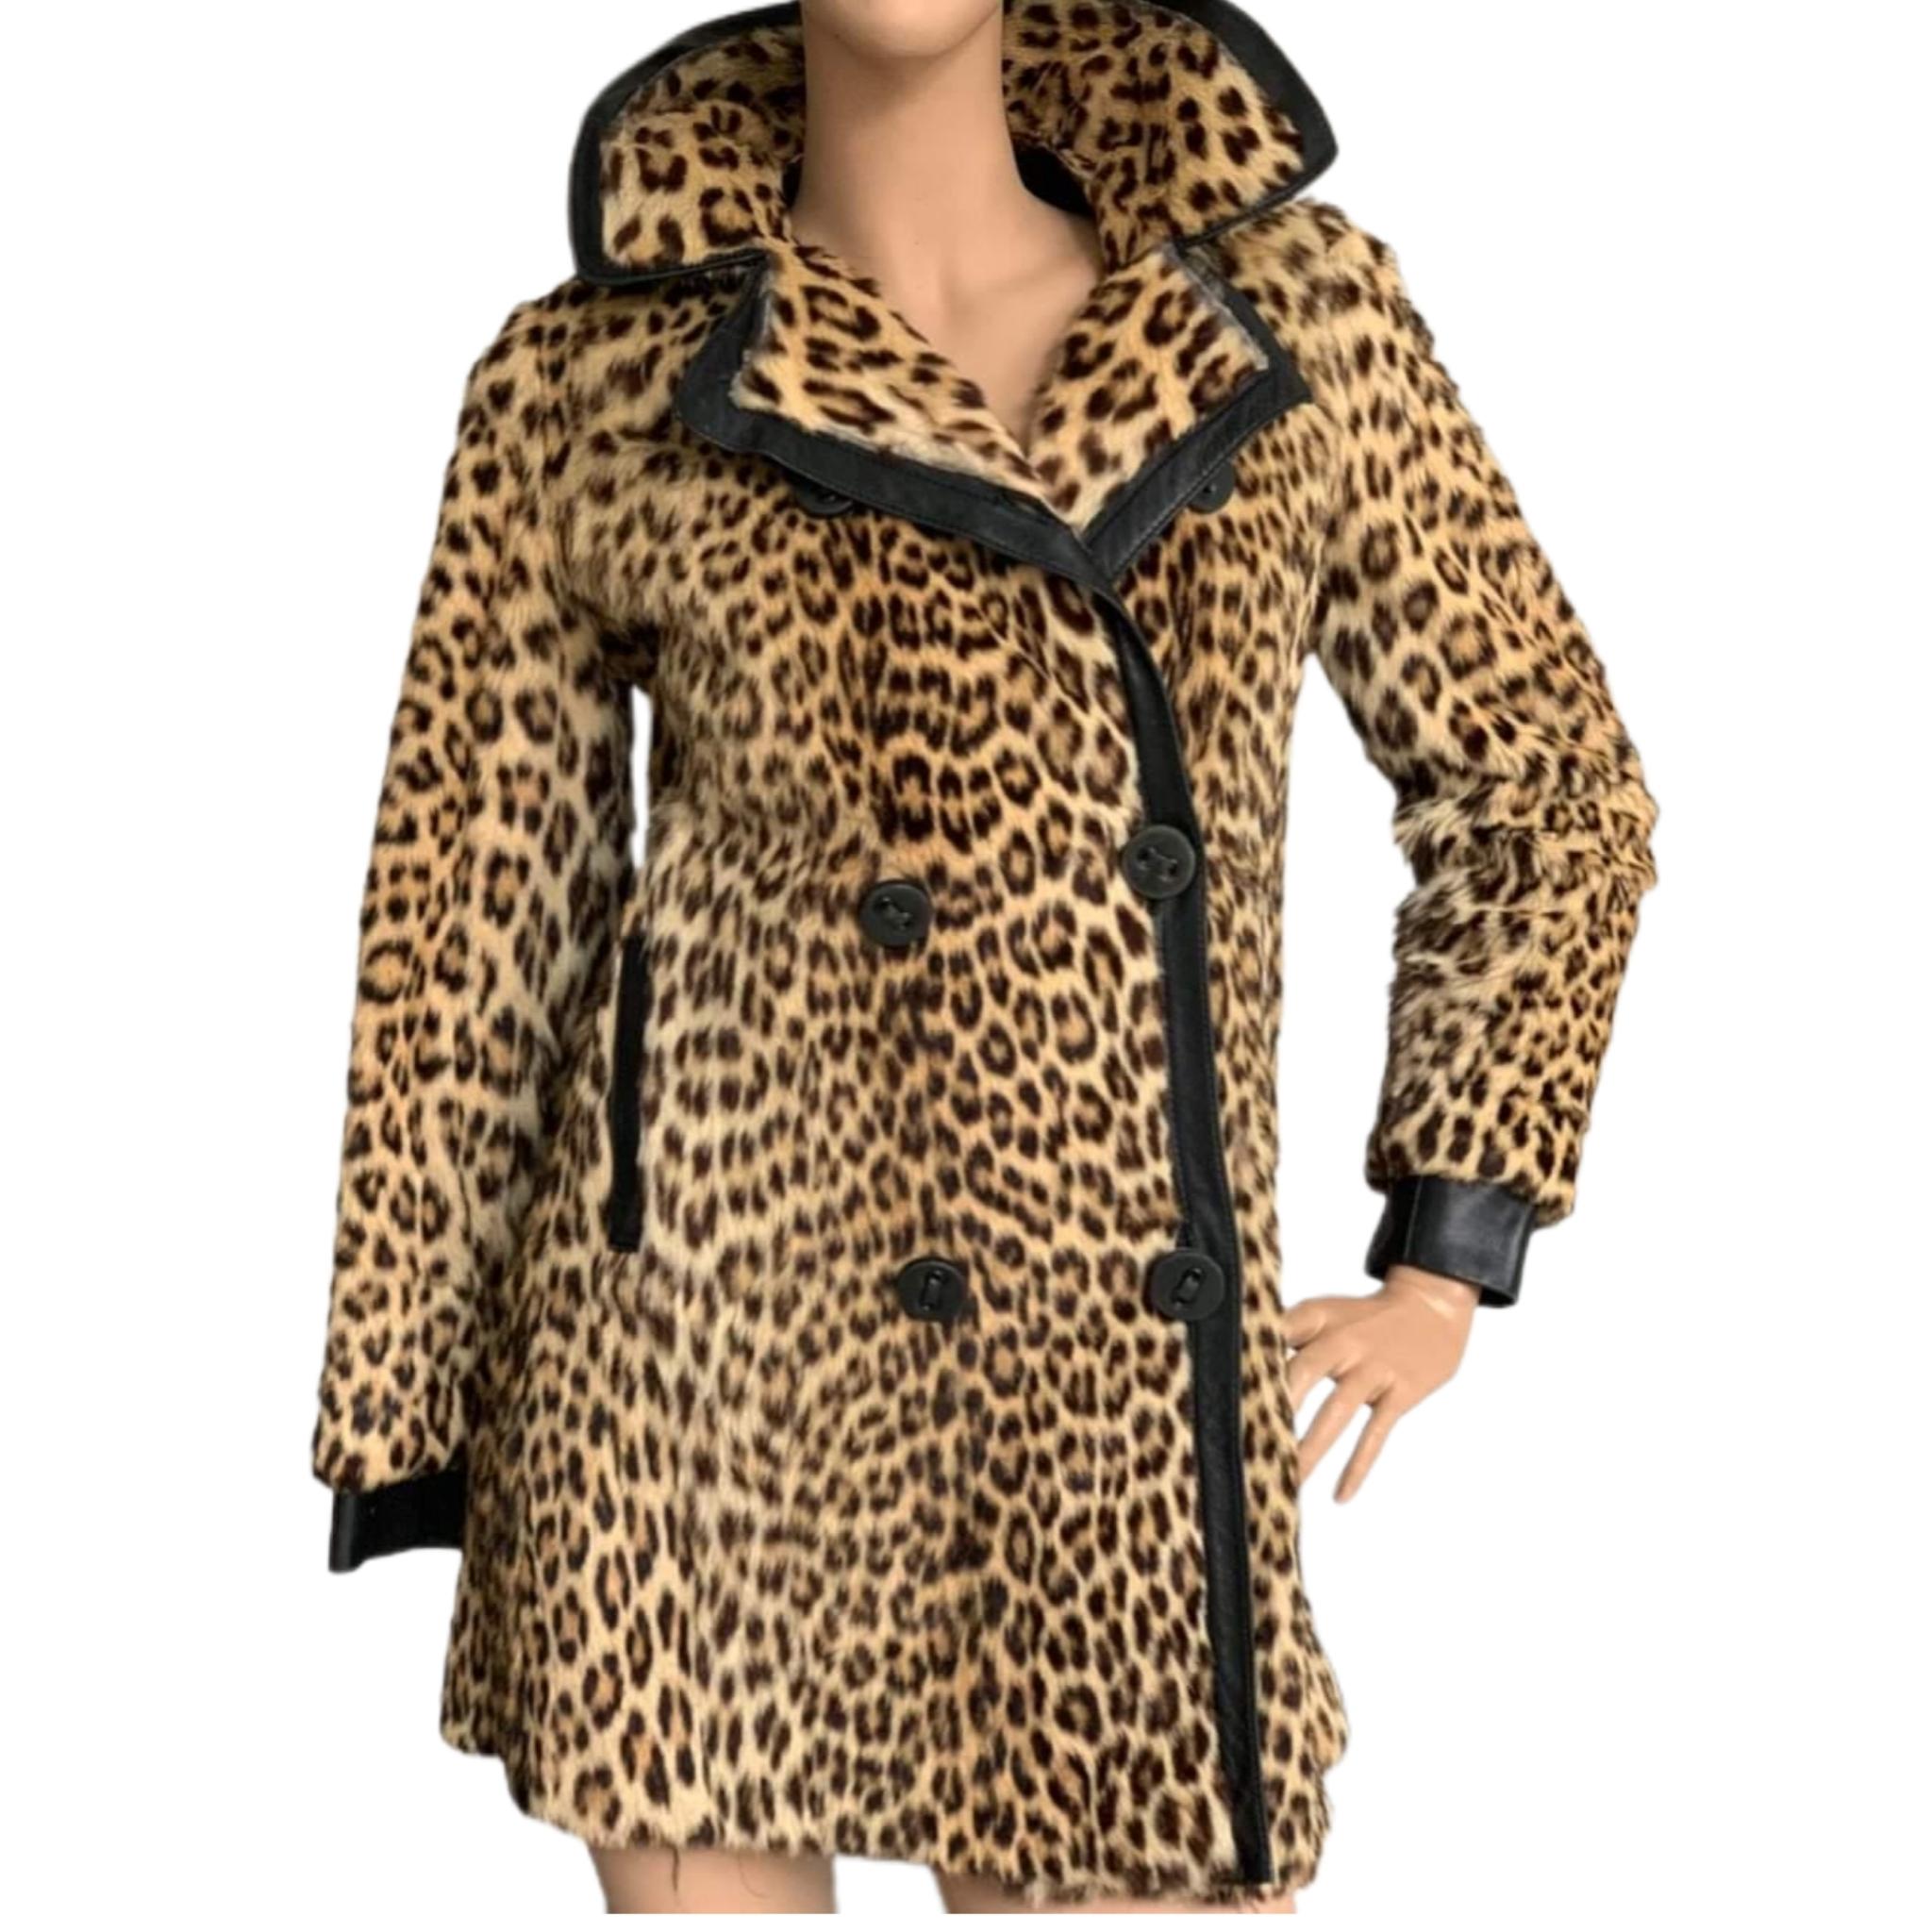 PRODUCT DESCRIPTION:

Vintage leopard fur coat size 10

Condition: Mint condition

Closure: Metal clasp

Color: Orange brown and black

Material: Fur

Garment type: leopard fur coat 

Sleeves: Straight

Pockets: Slit pockets

Collar: notch

Lining: